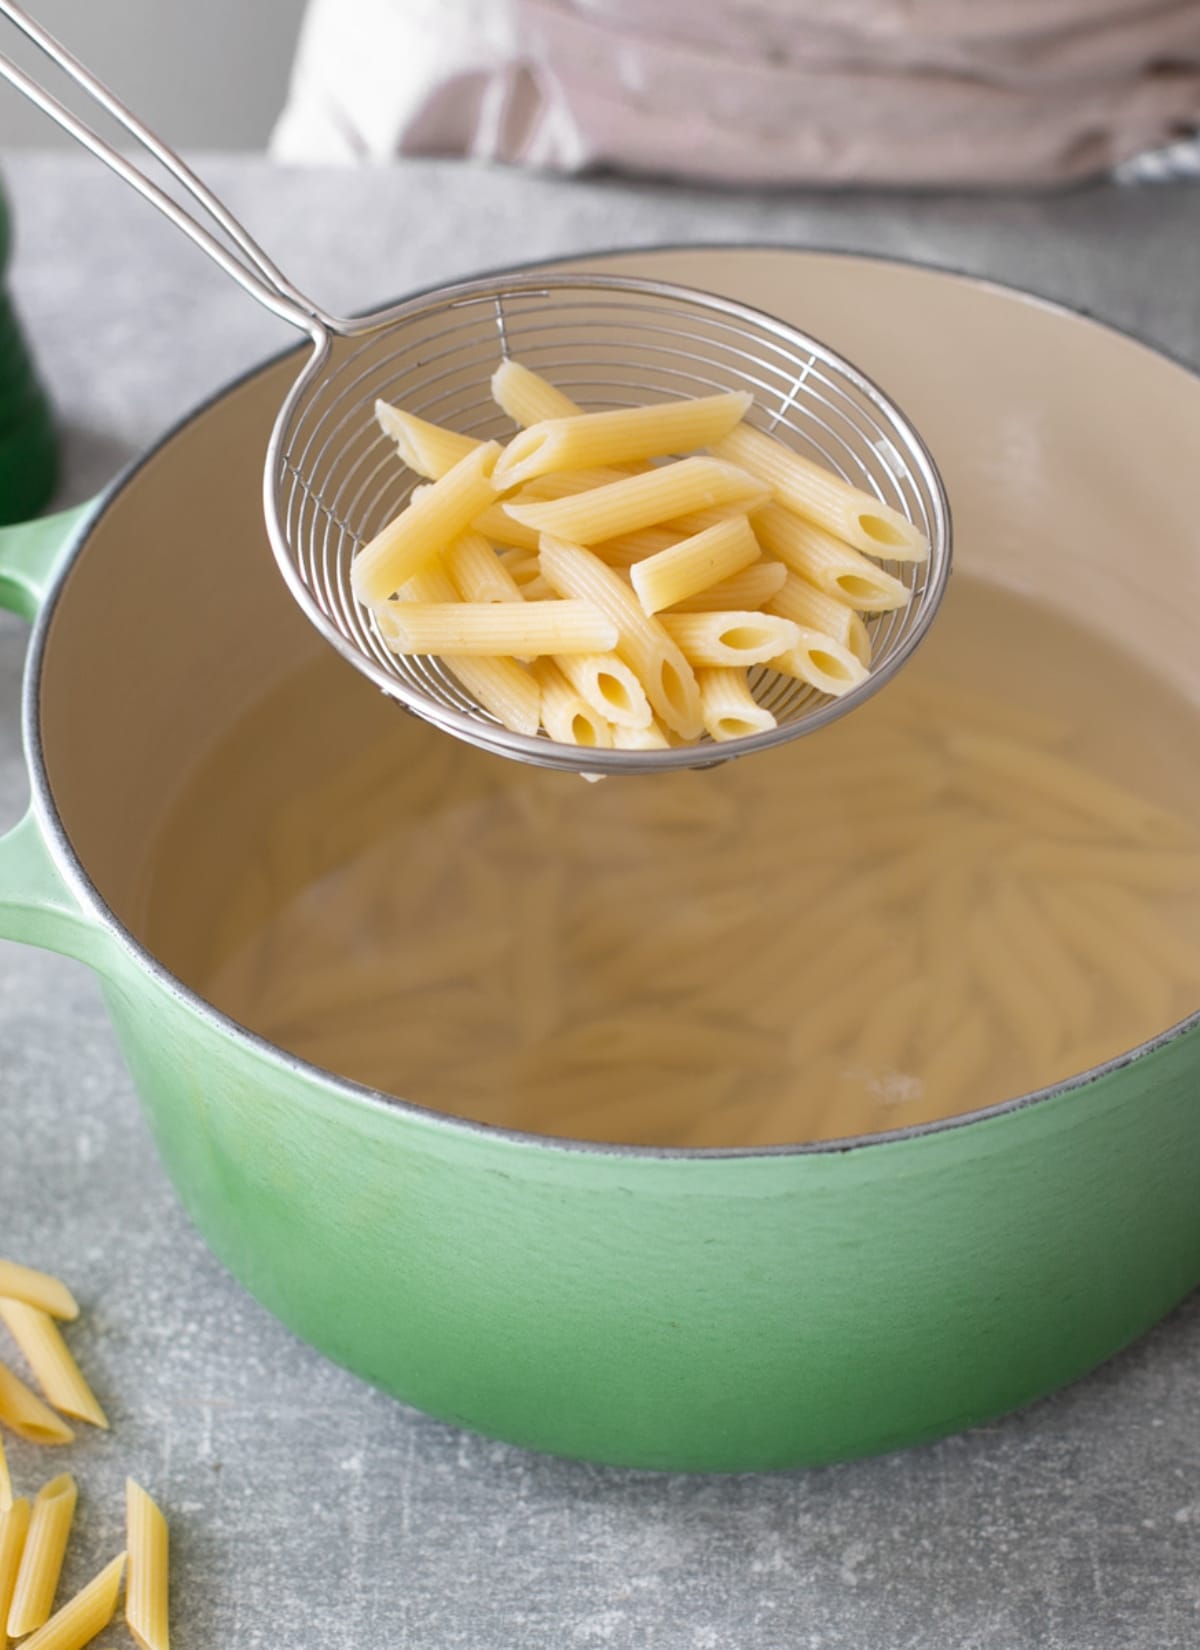 Al dente pasta drained with a colander.